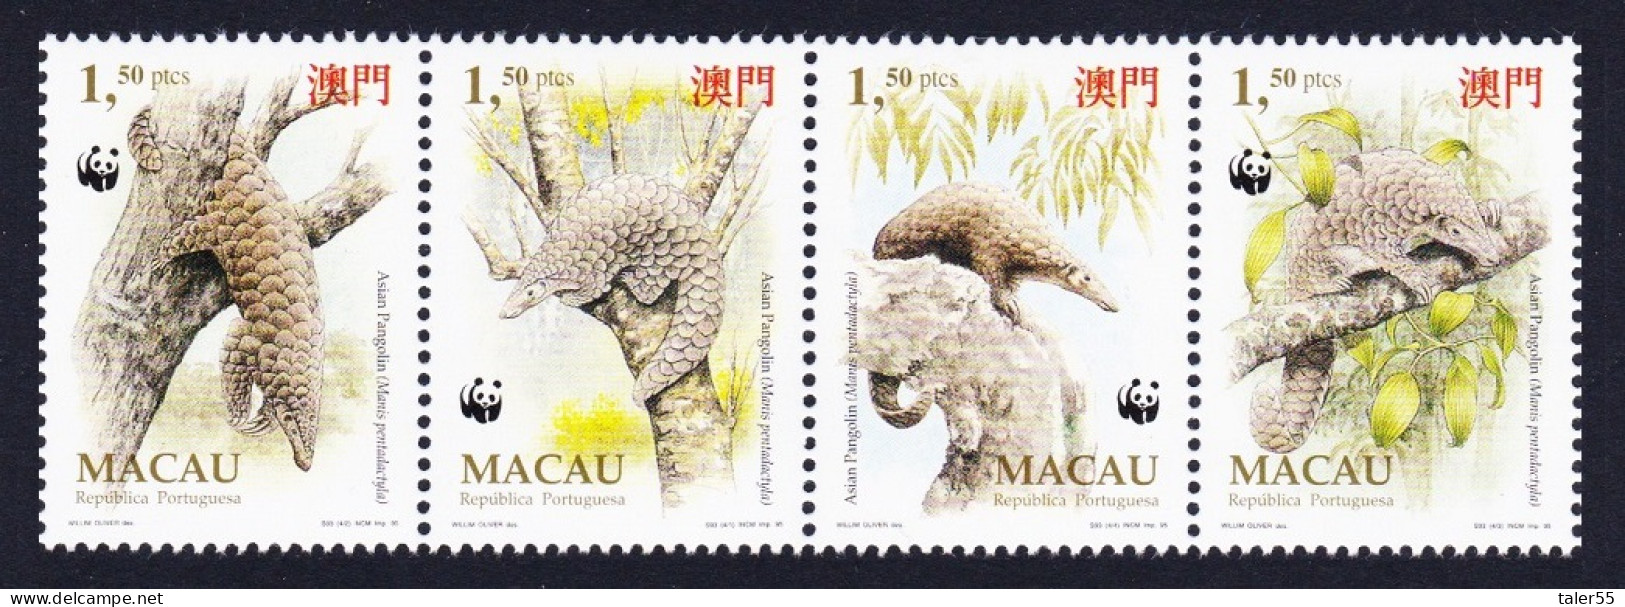 Macao Macau WWF Chinese Pangolin 4v Strip 1995 MNH SG#880-883 MI#795-798 Sc#767-770 - Neufs